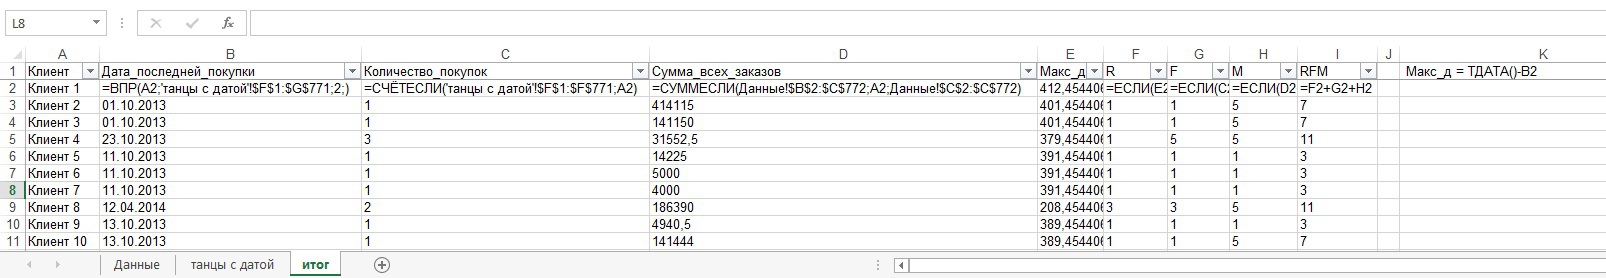 RFM-анализ на коленке (Excel) - 3